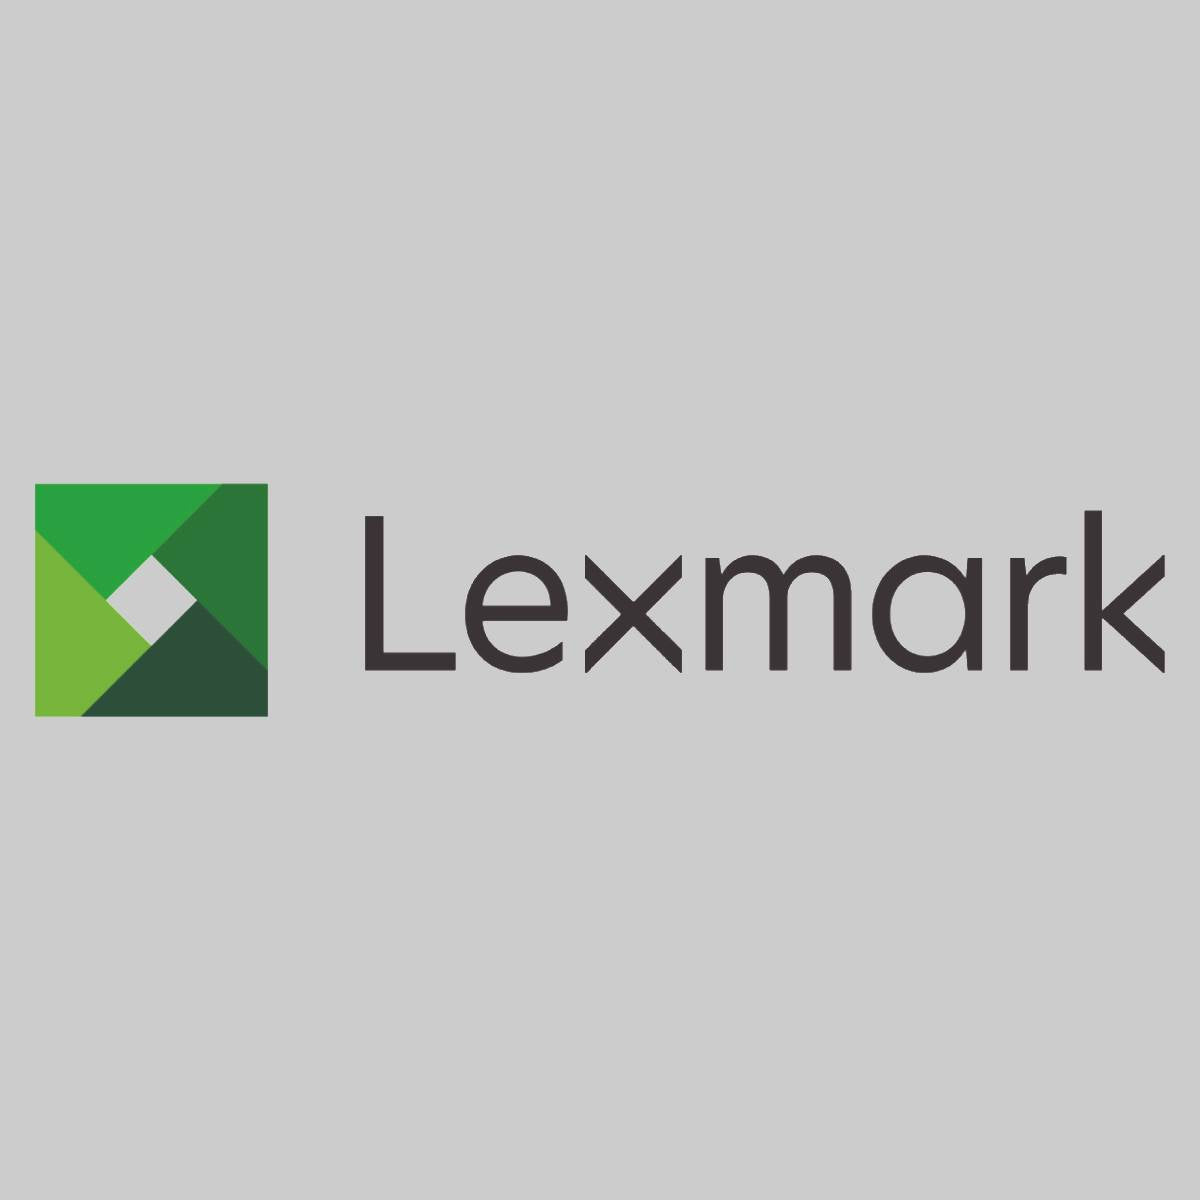 "Originele Lexmark Photoconductor Black 76C0PK0 voor 9200 Series Unit NEW OVP